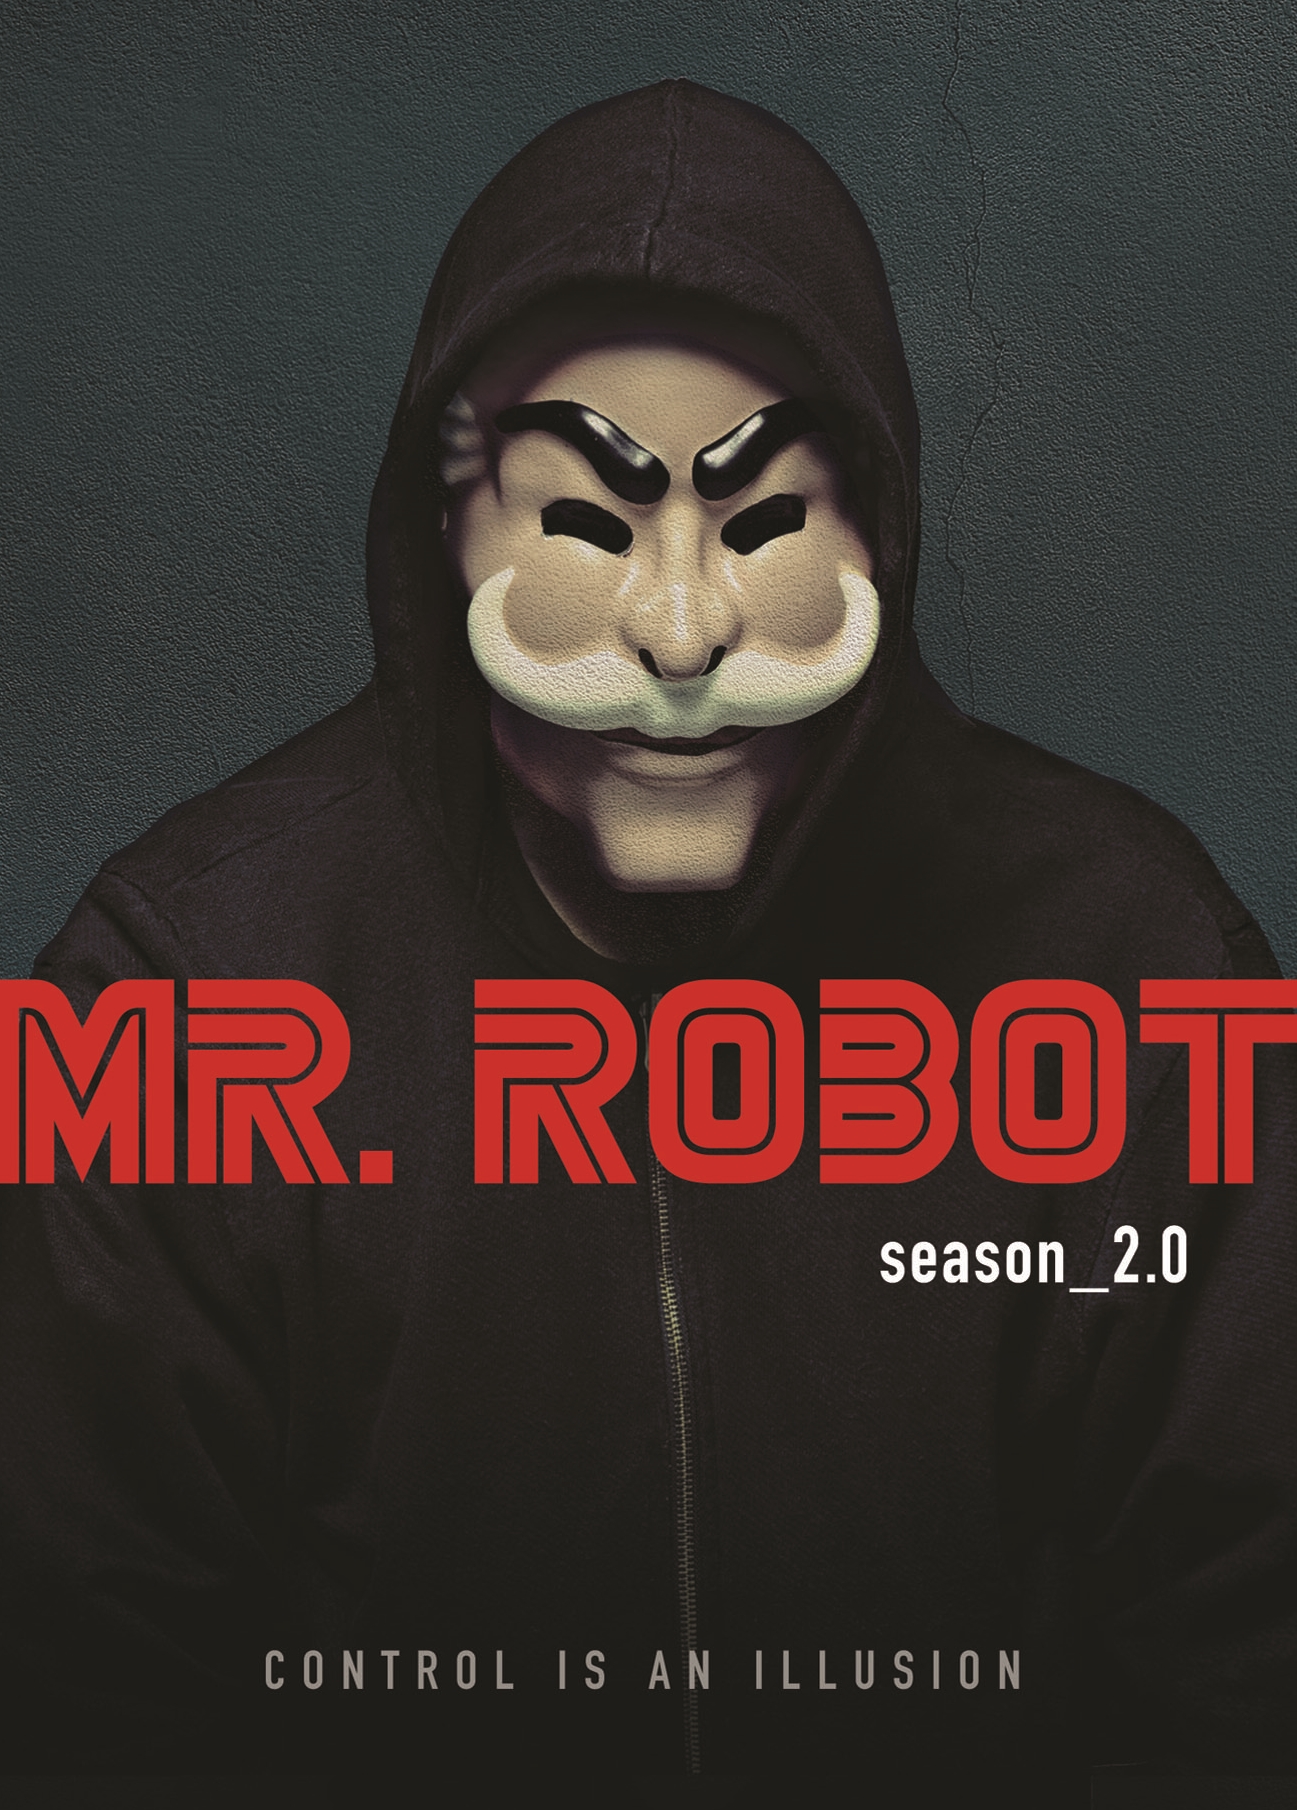 Mr. Robot: Season 4 [Blu-ray]